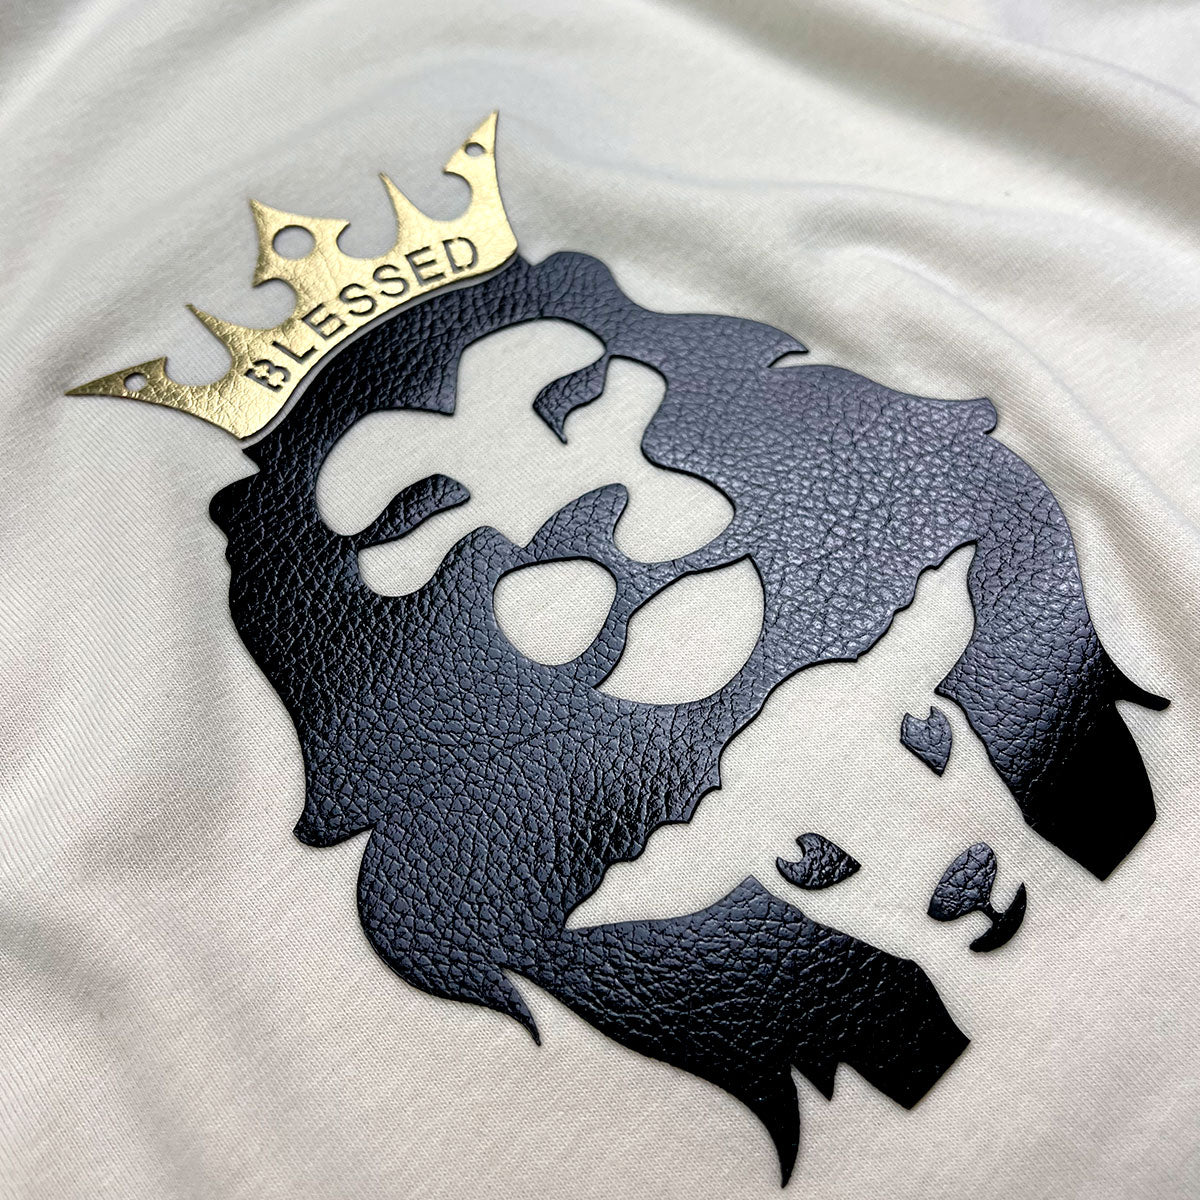 Camiseta Masculina Off White Coroa Cordeiro e Leão